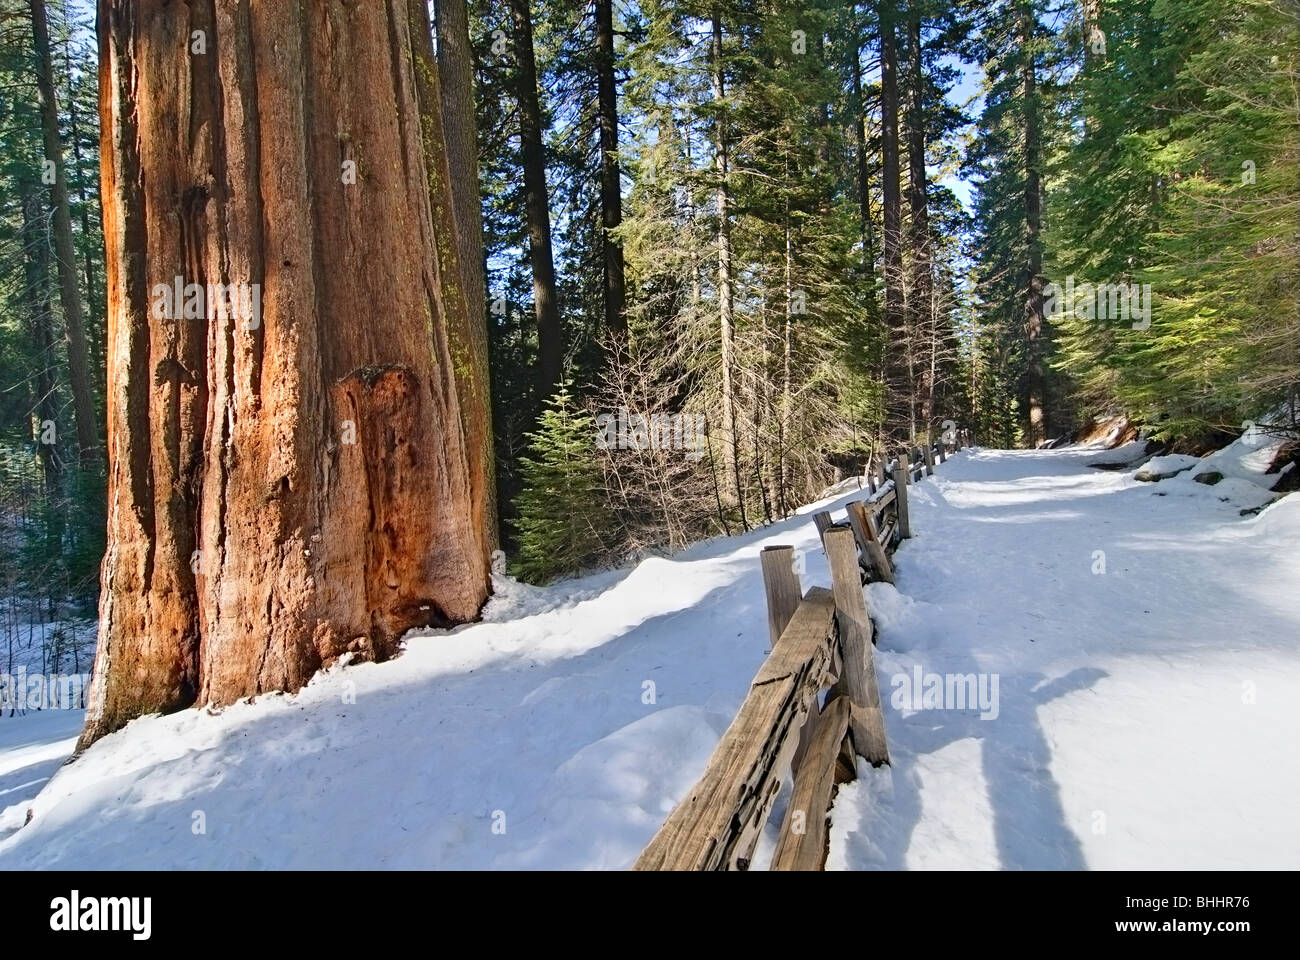 Giant Sequoia Trees of Tuolumne Grove in Yosemite National Park. Stock Photo